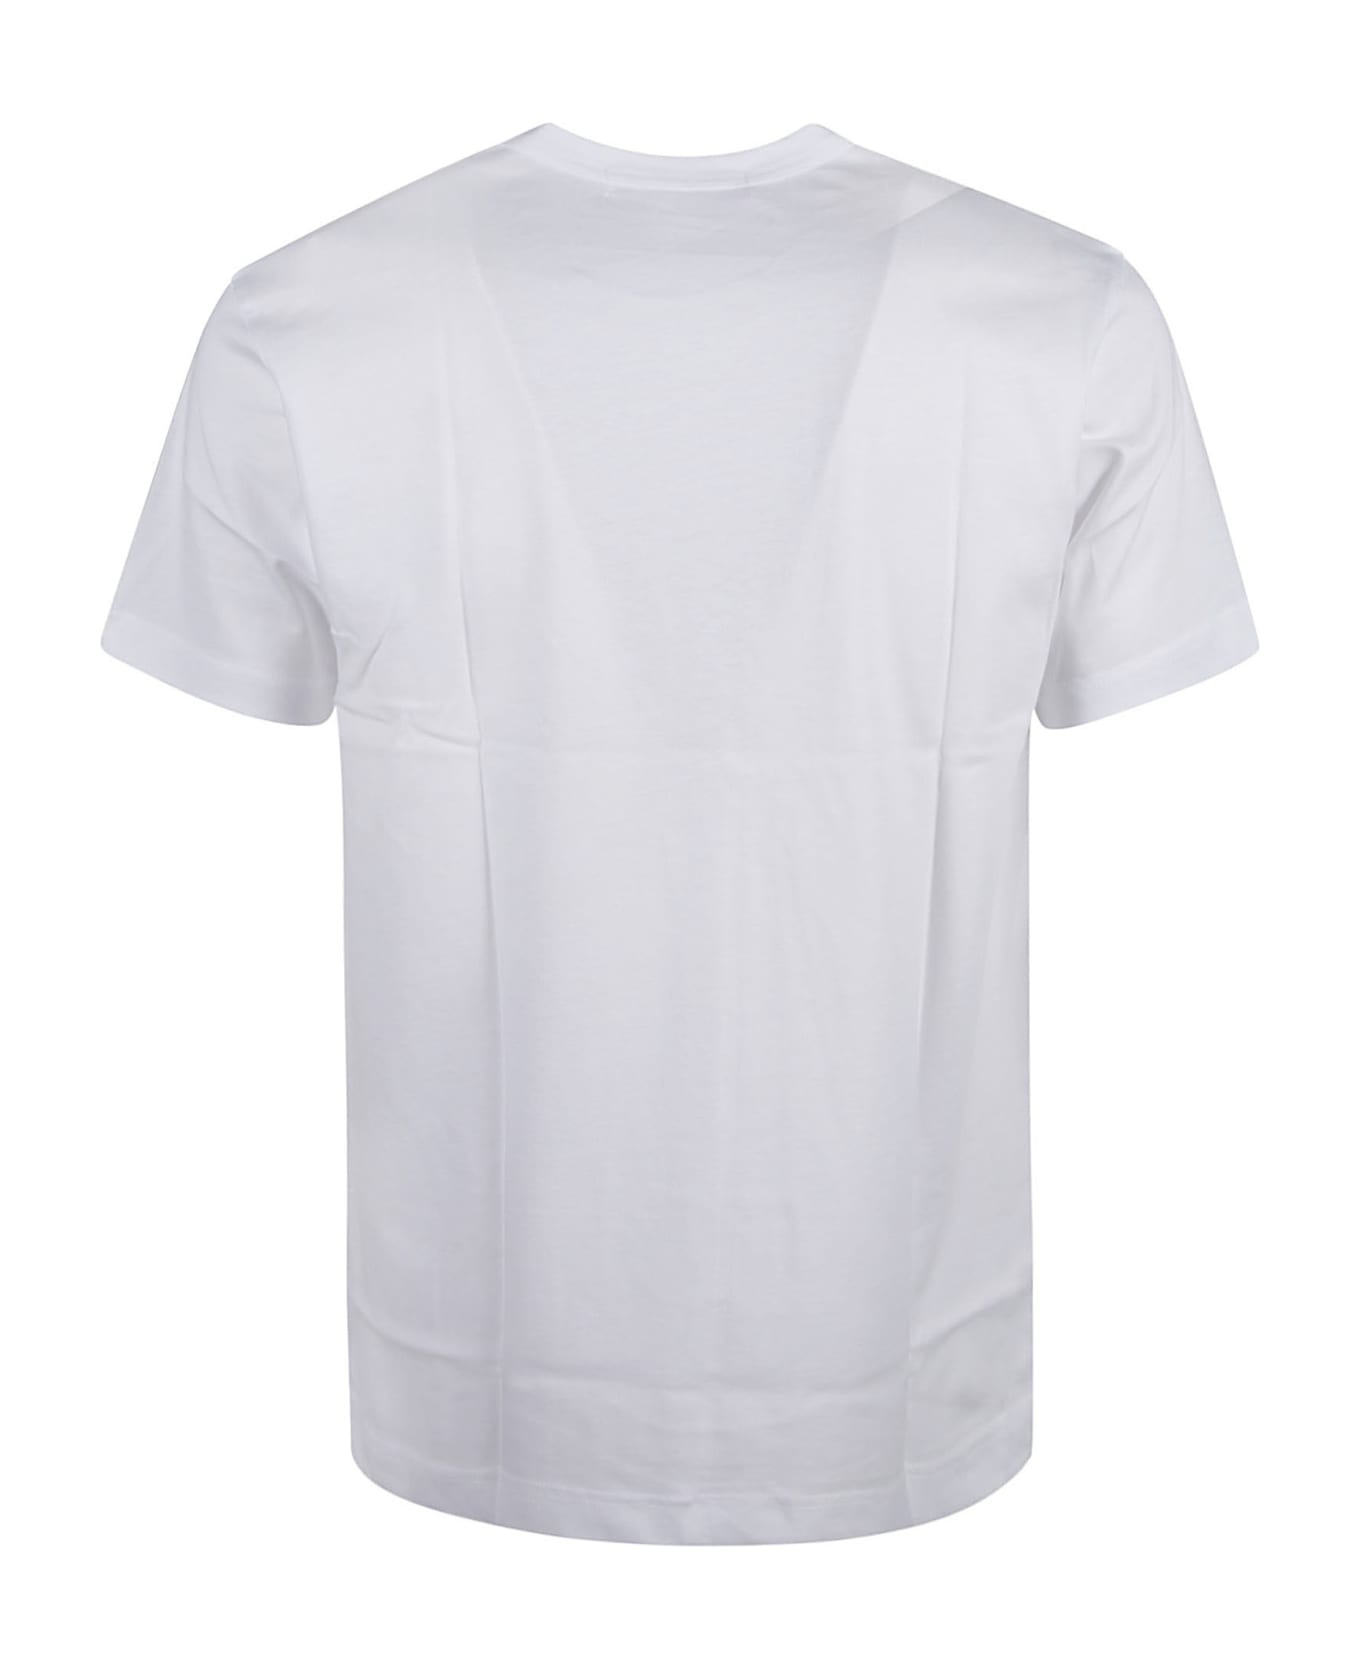 Comme des Garçons Shirt I've Always Admited T-shirt - White シャツ